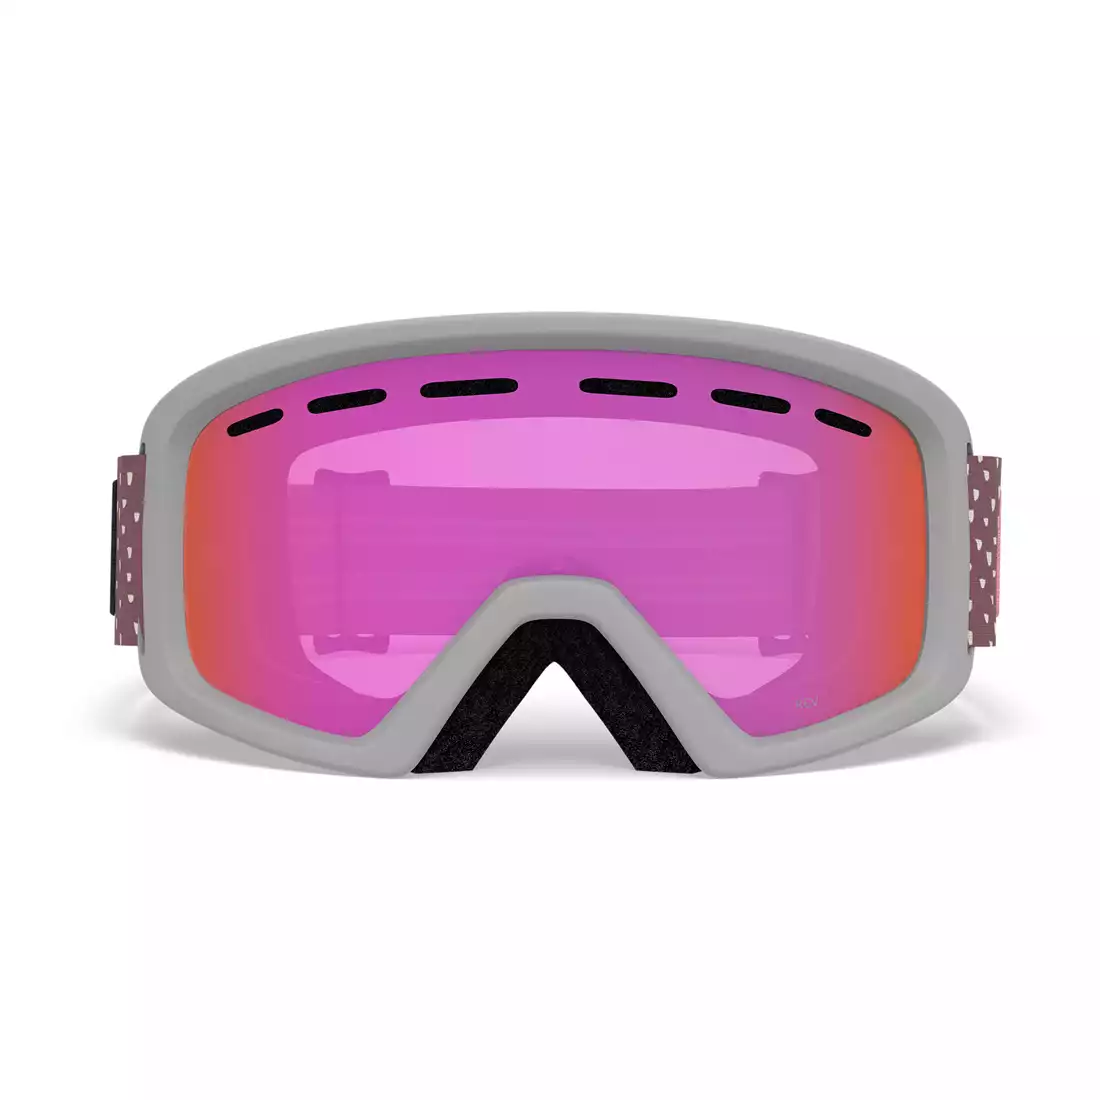 Juniorskie gogle narciarskie / snowboardowe REV NAMUK PINK GR-7105431